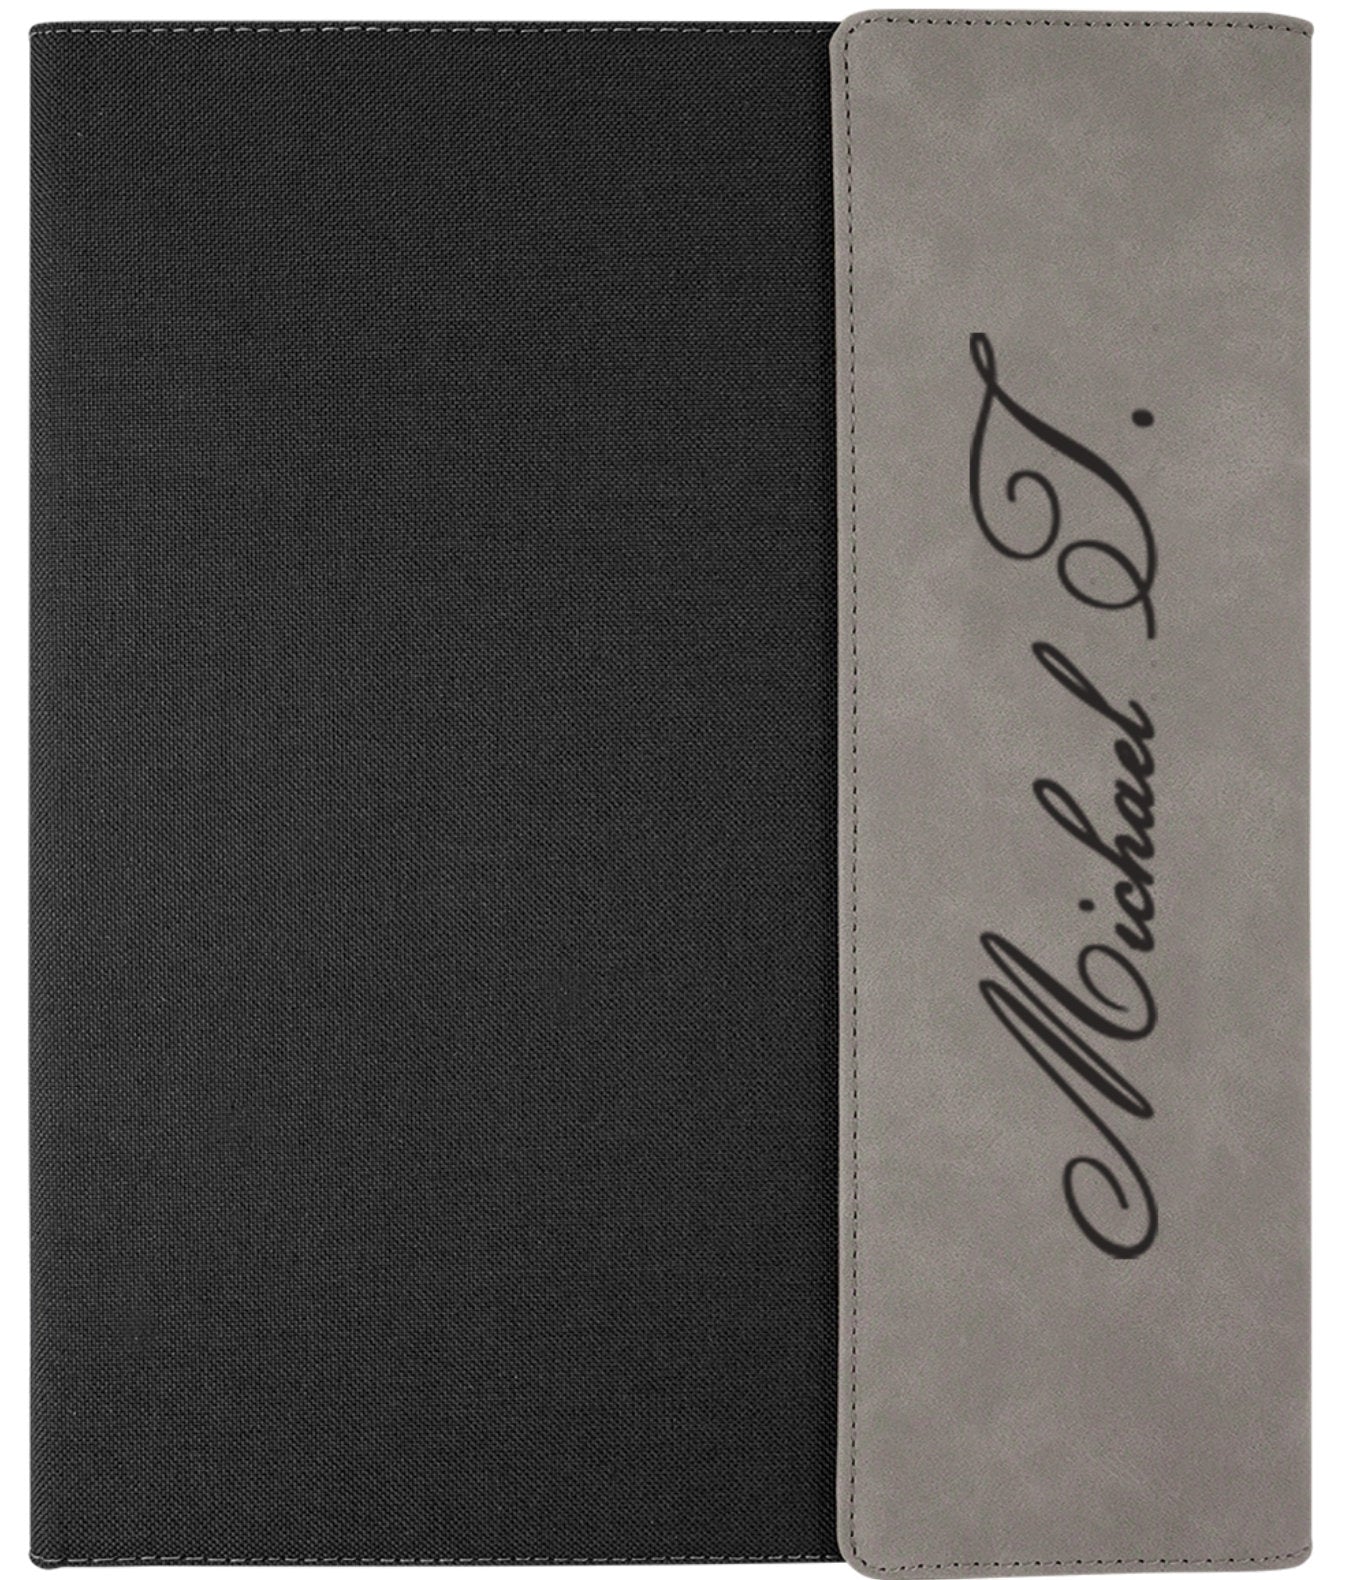 Personalized Leather Portfolio, Leather Padfolio, Leather Portfolio Zipper, Custom Engraved Portfolio, Graduation Gift Personalized Gift